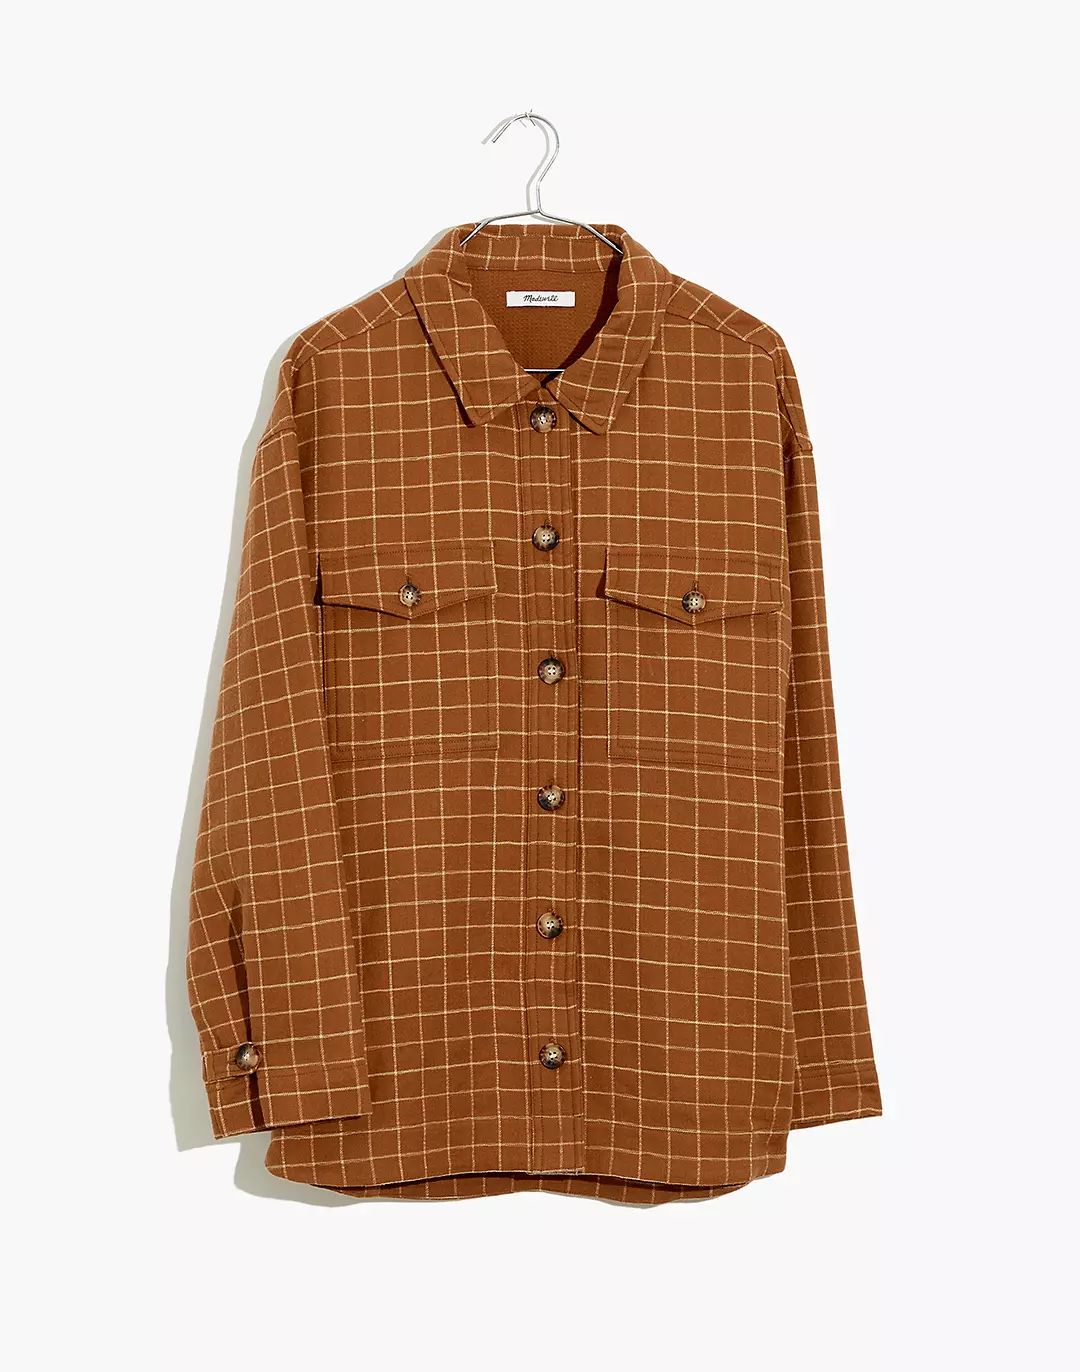 Waffleback Branner Shirt-Jacket in Windowpane | Madewell